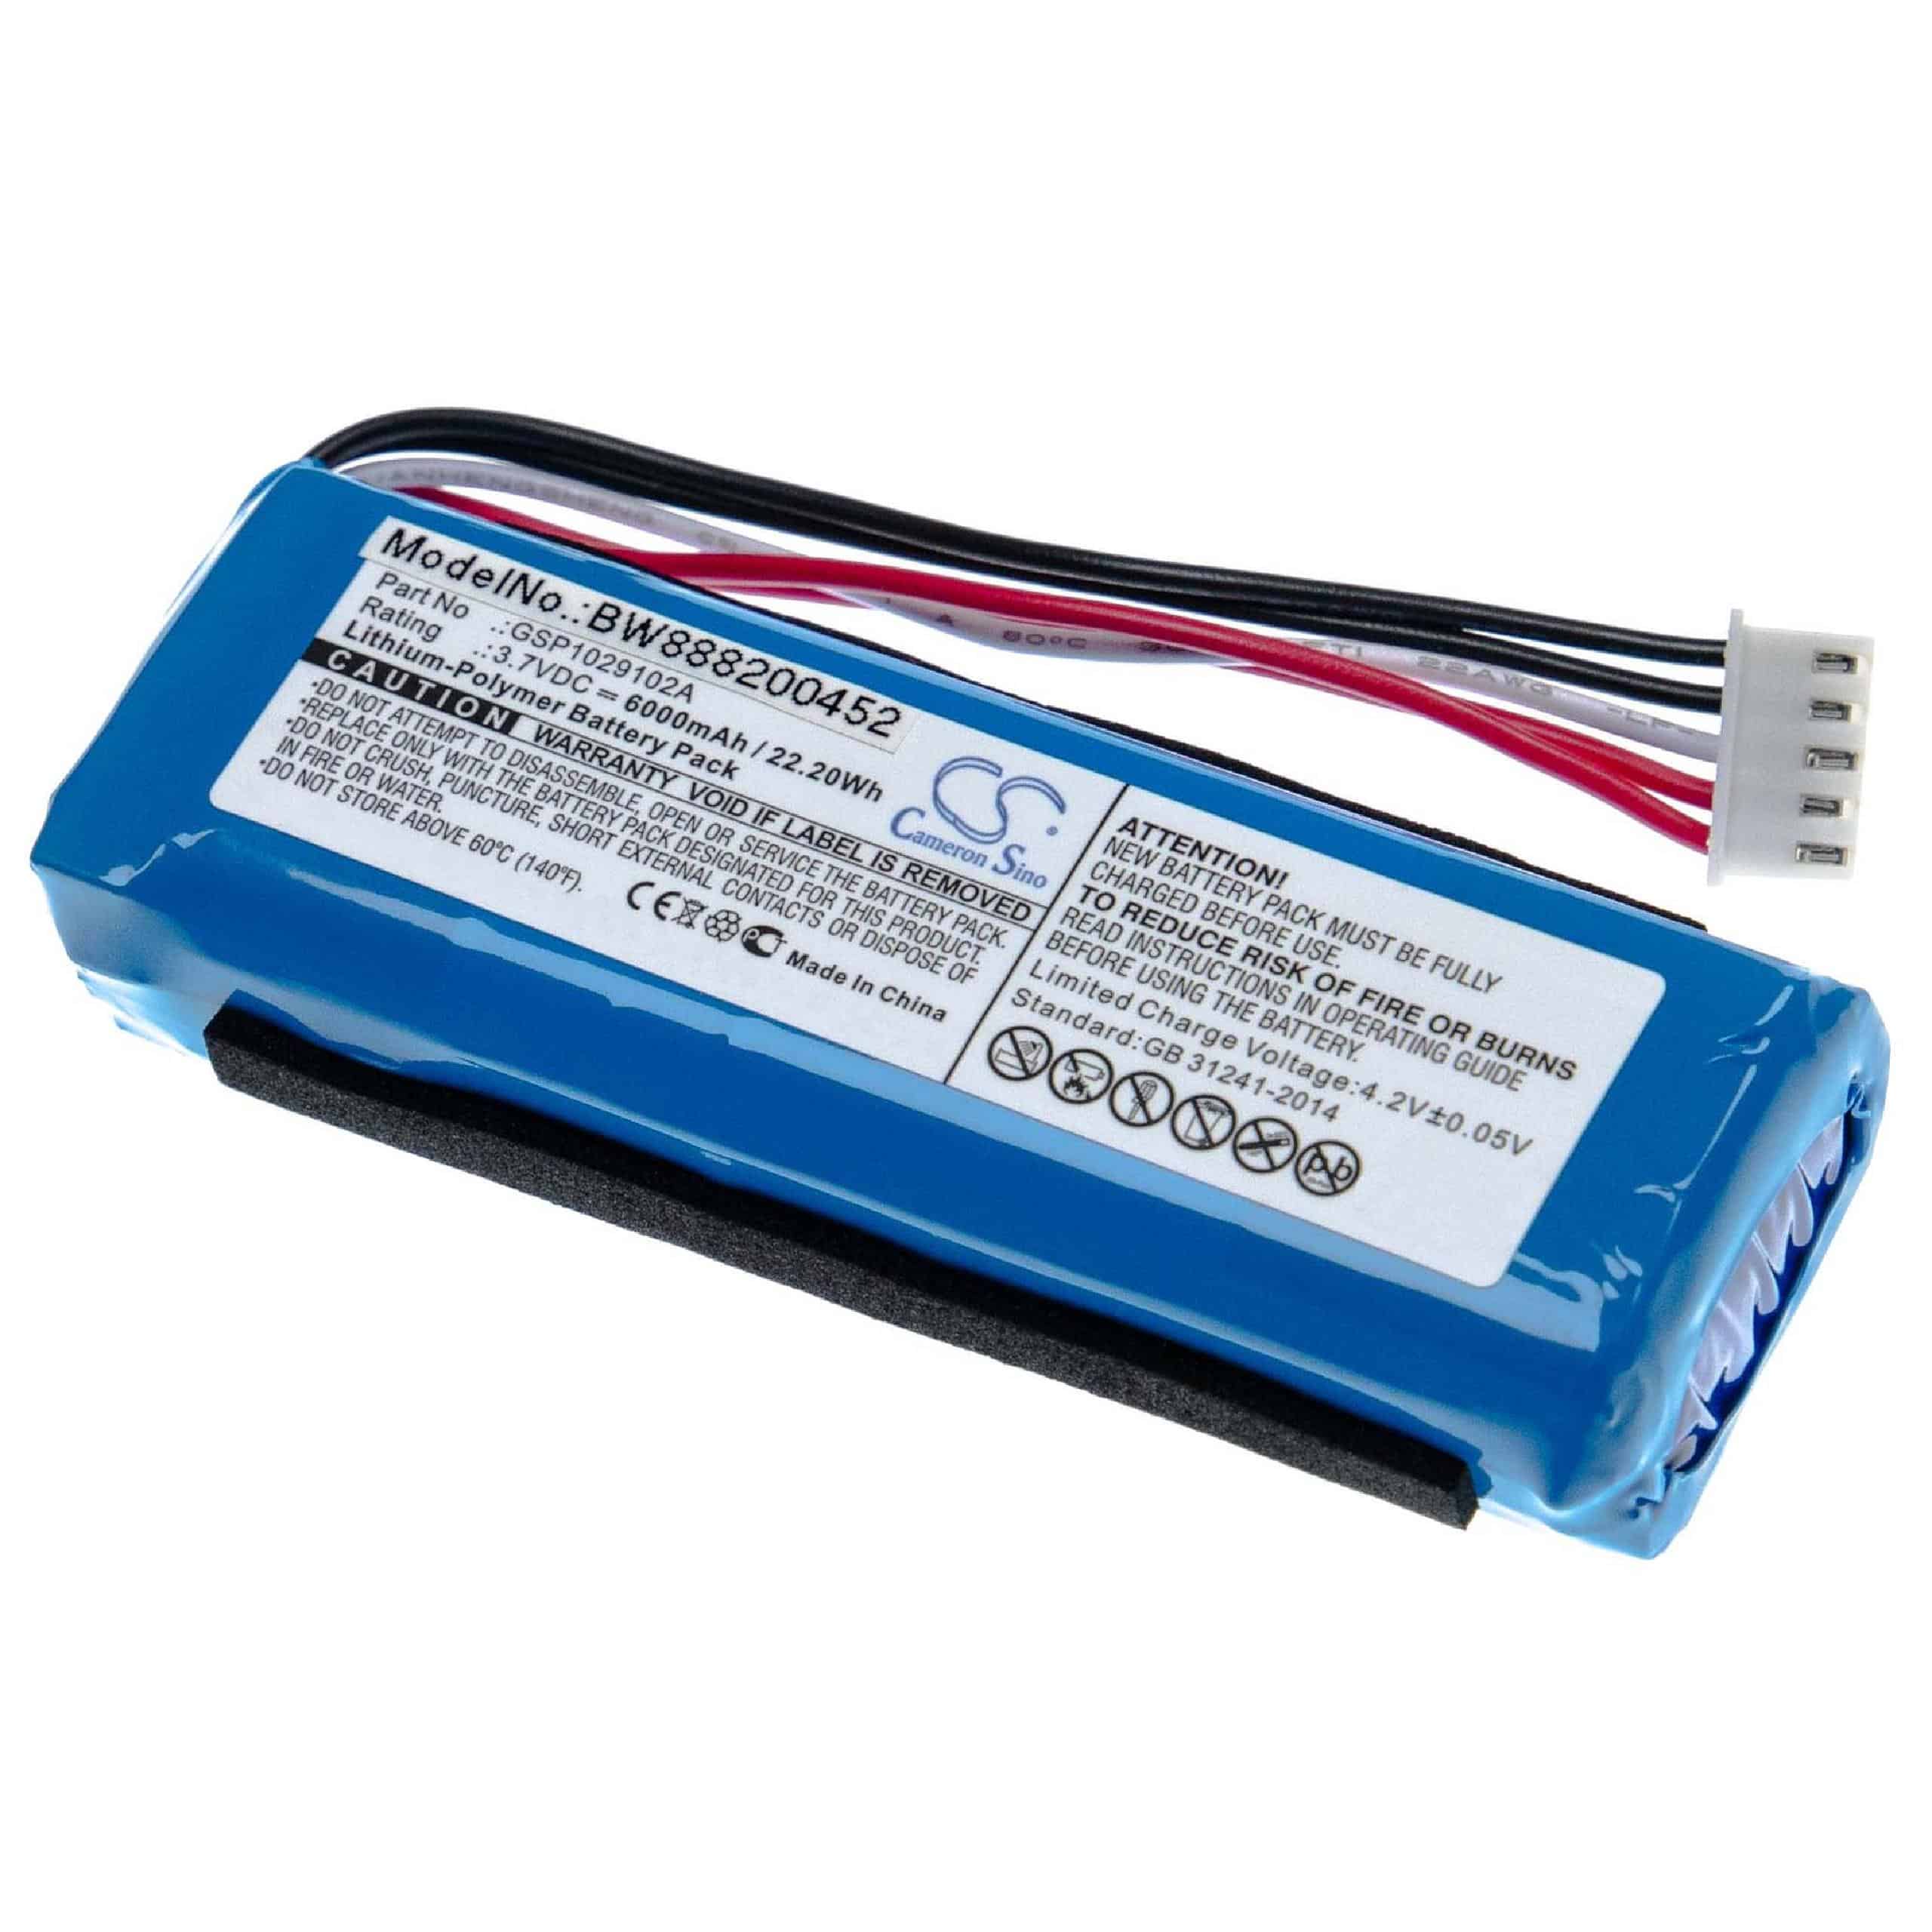 Batterie remplace JBL GSP1029102A (version 2) pour enceinte JBL - 6000mAh 3,7V Li-polymère